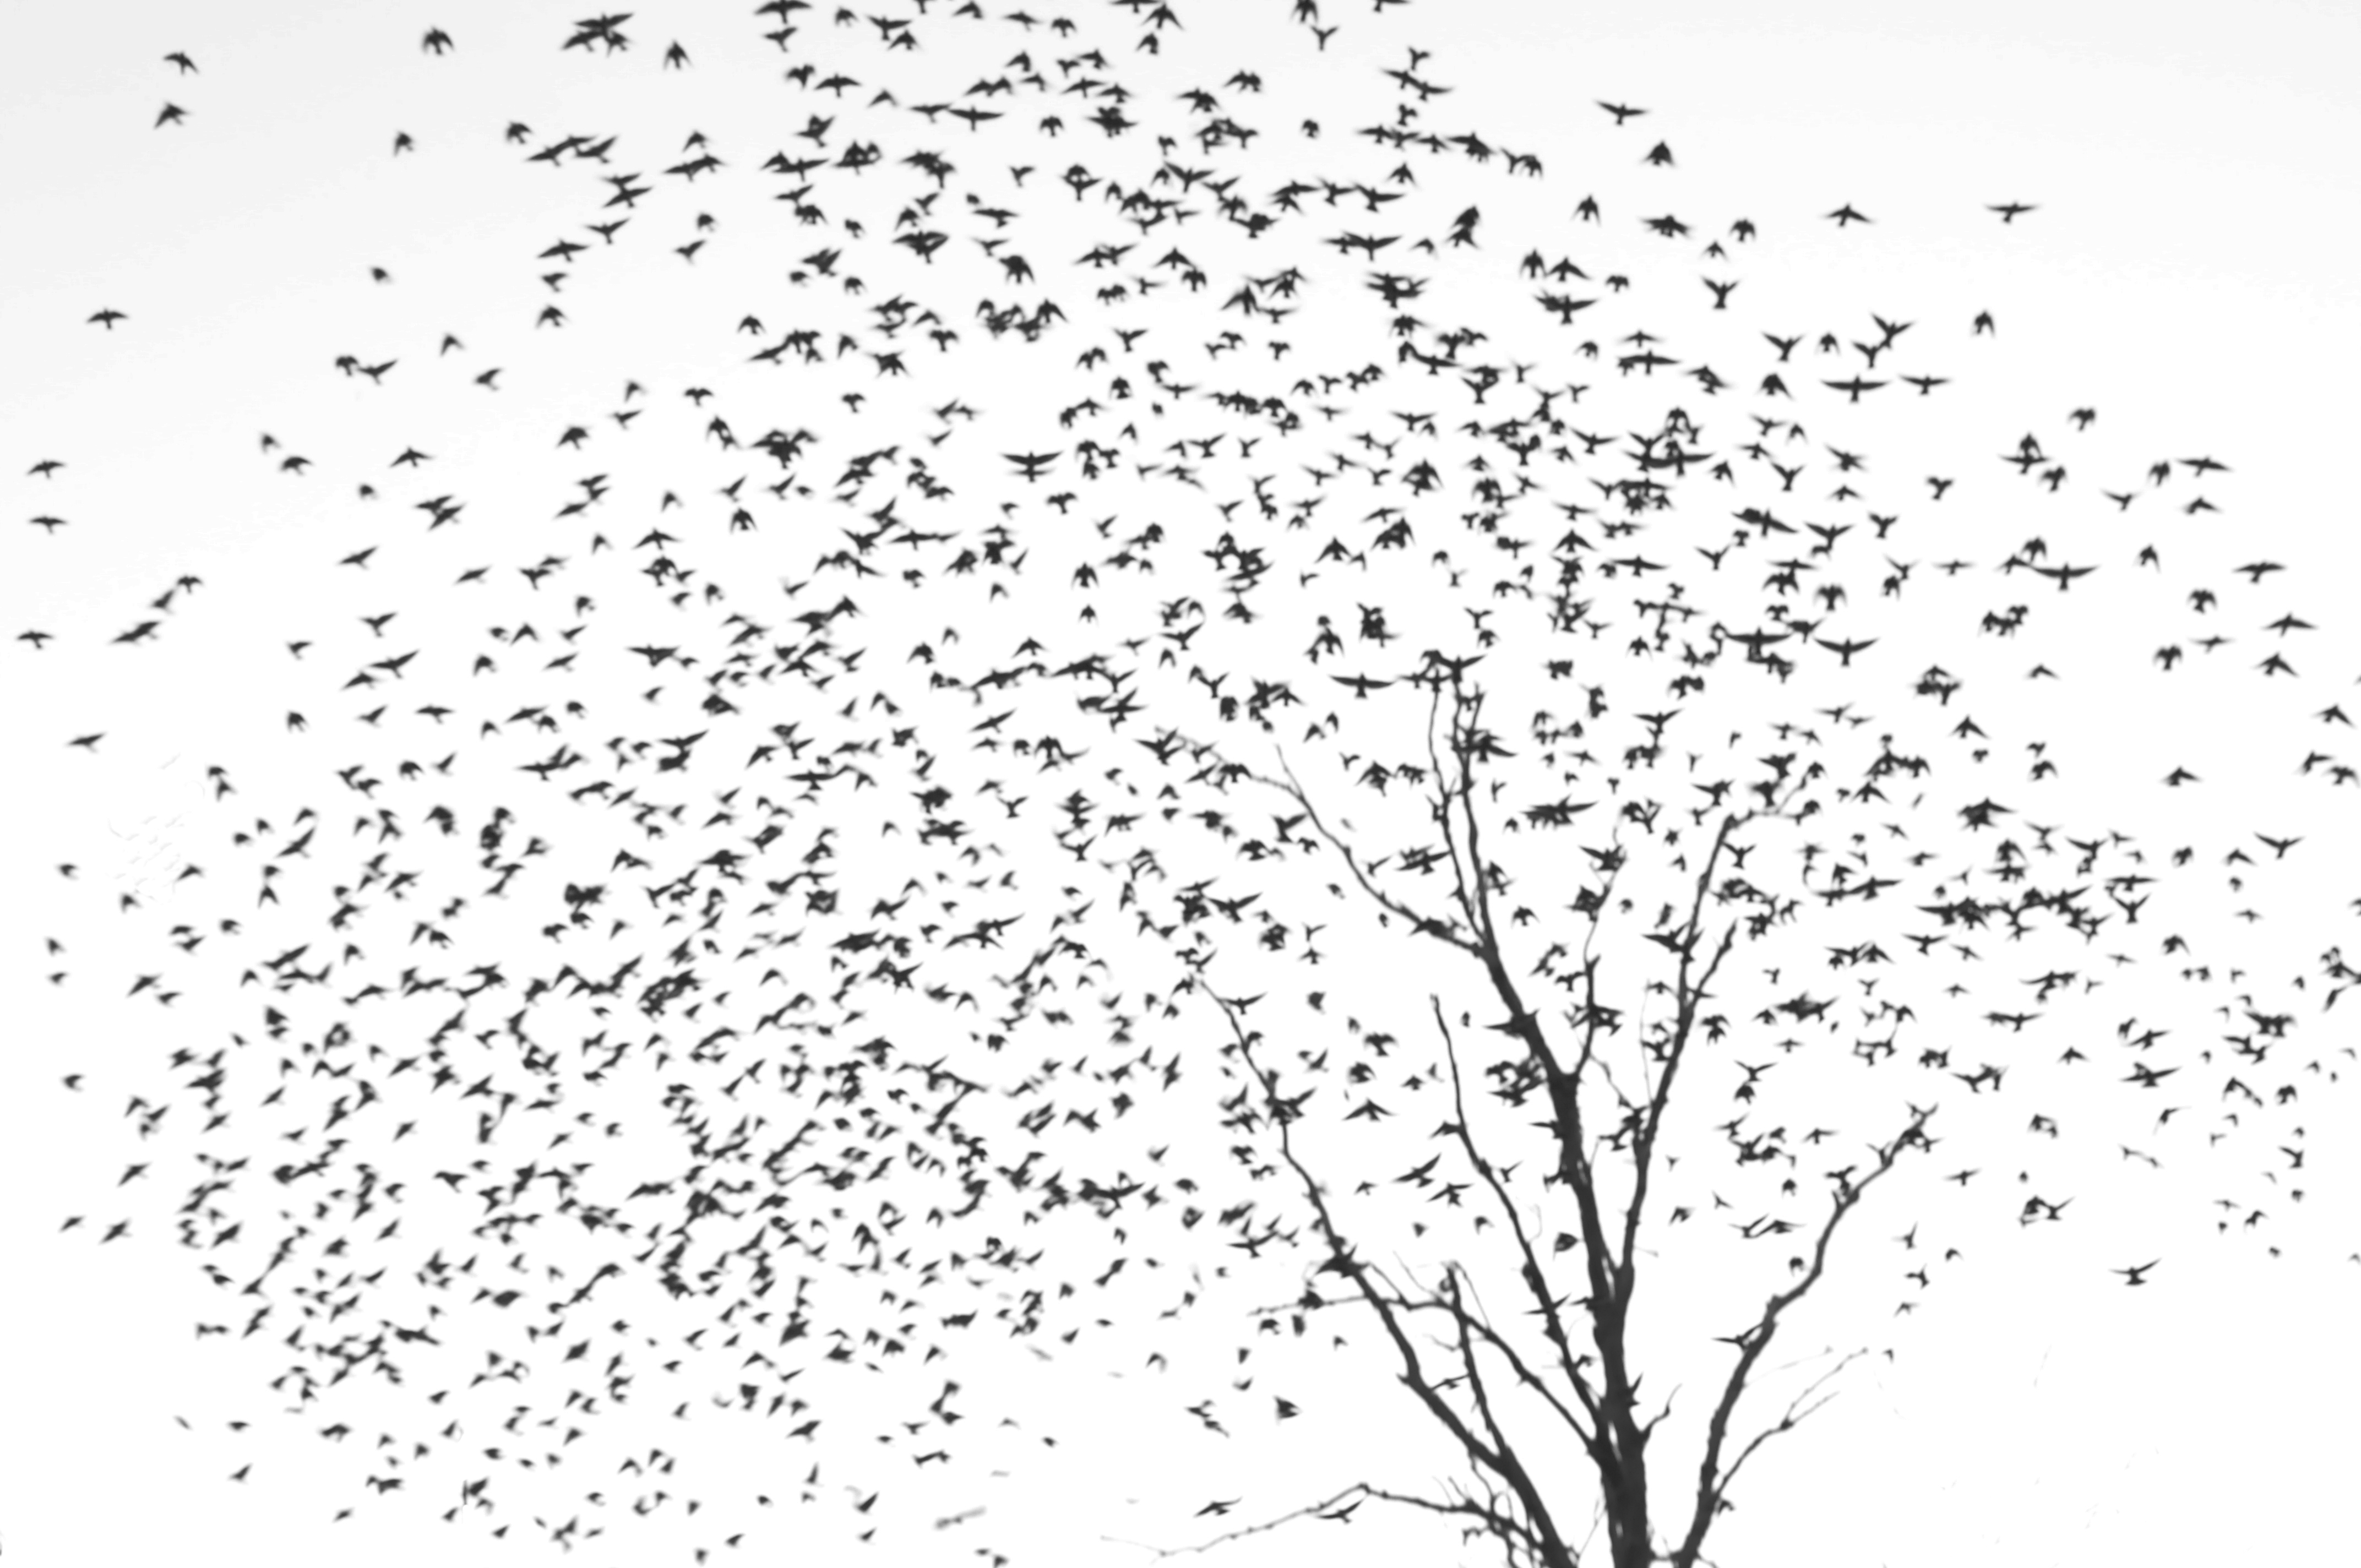 birds flying away